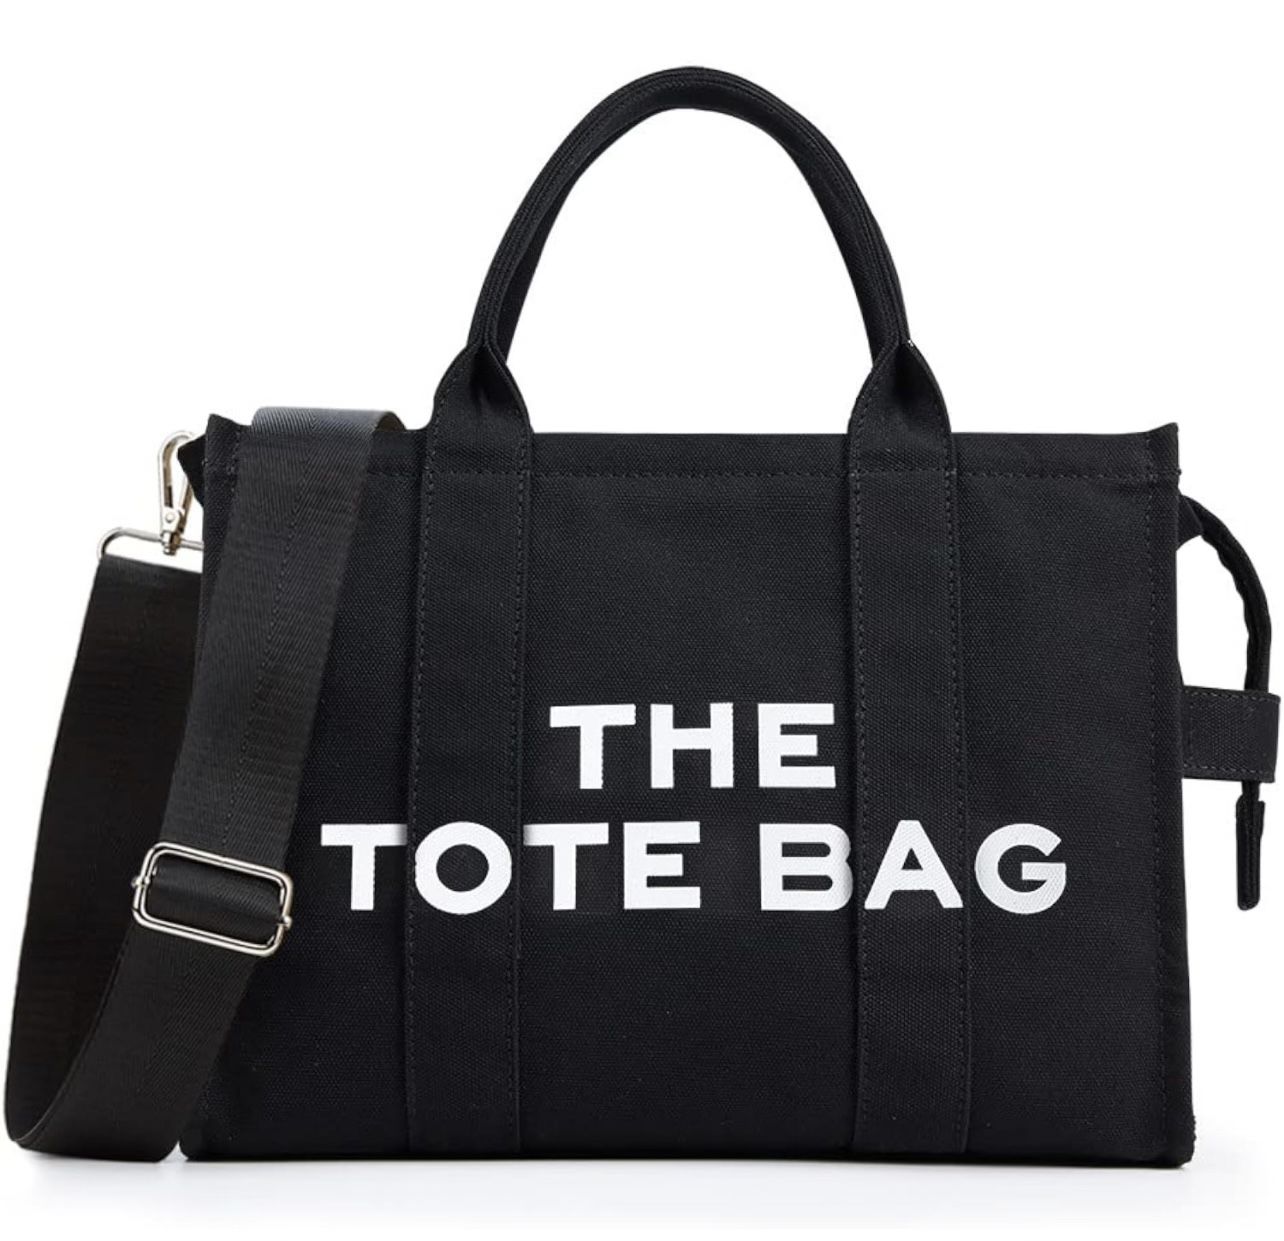 New In Bag Black The Tote Bag for Women, Canvas Tote Bag w/ Zipper, Aesthetic Shoulder, Crossbody, Handbag Tote